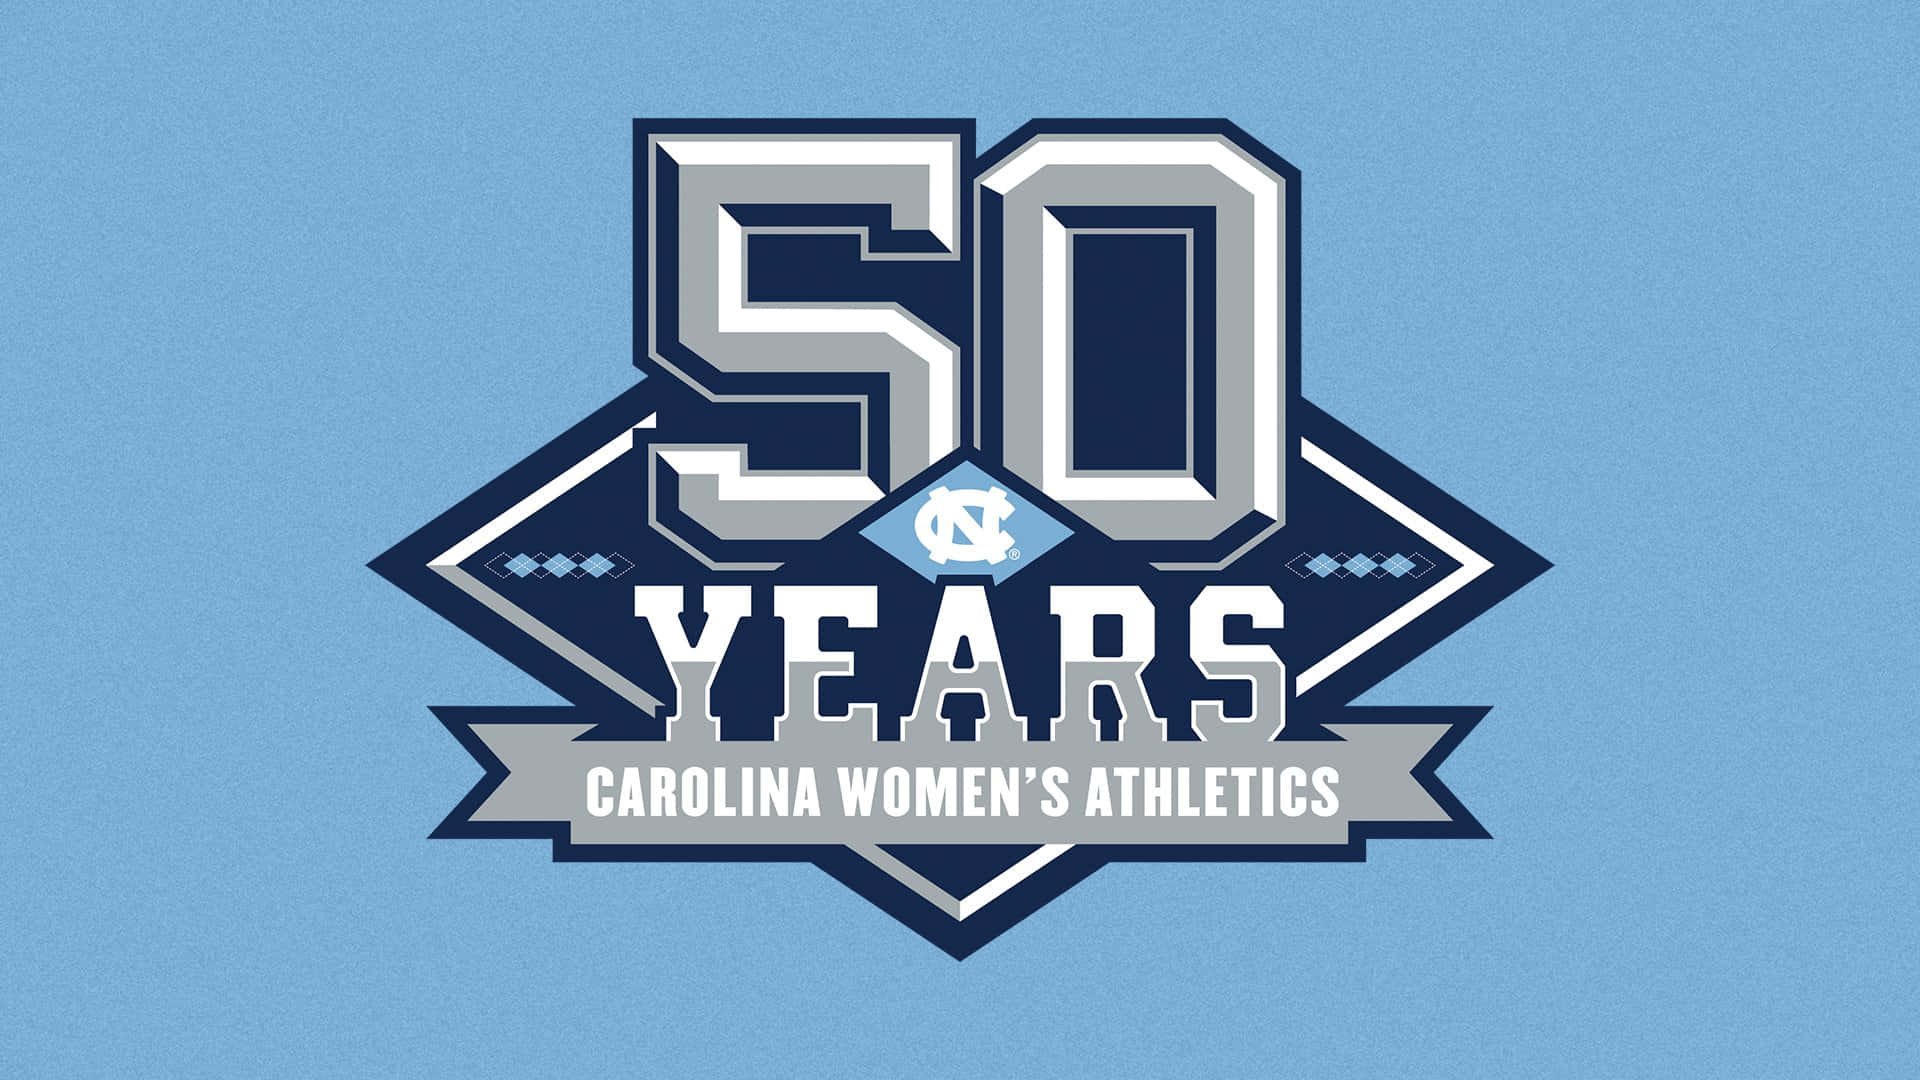 The Logo For The 50th Anniversary Of The Carolina Women's Athletics Wallpaper